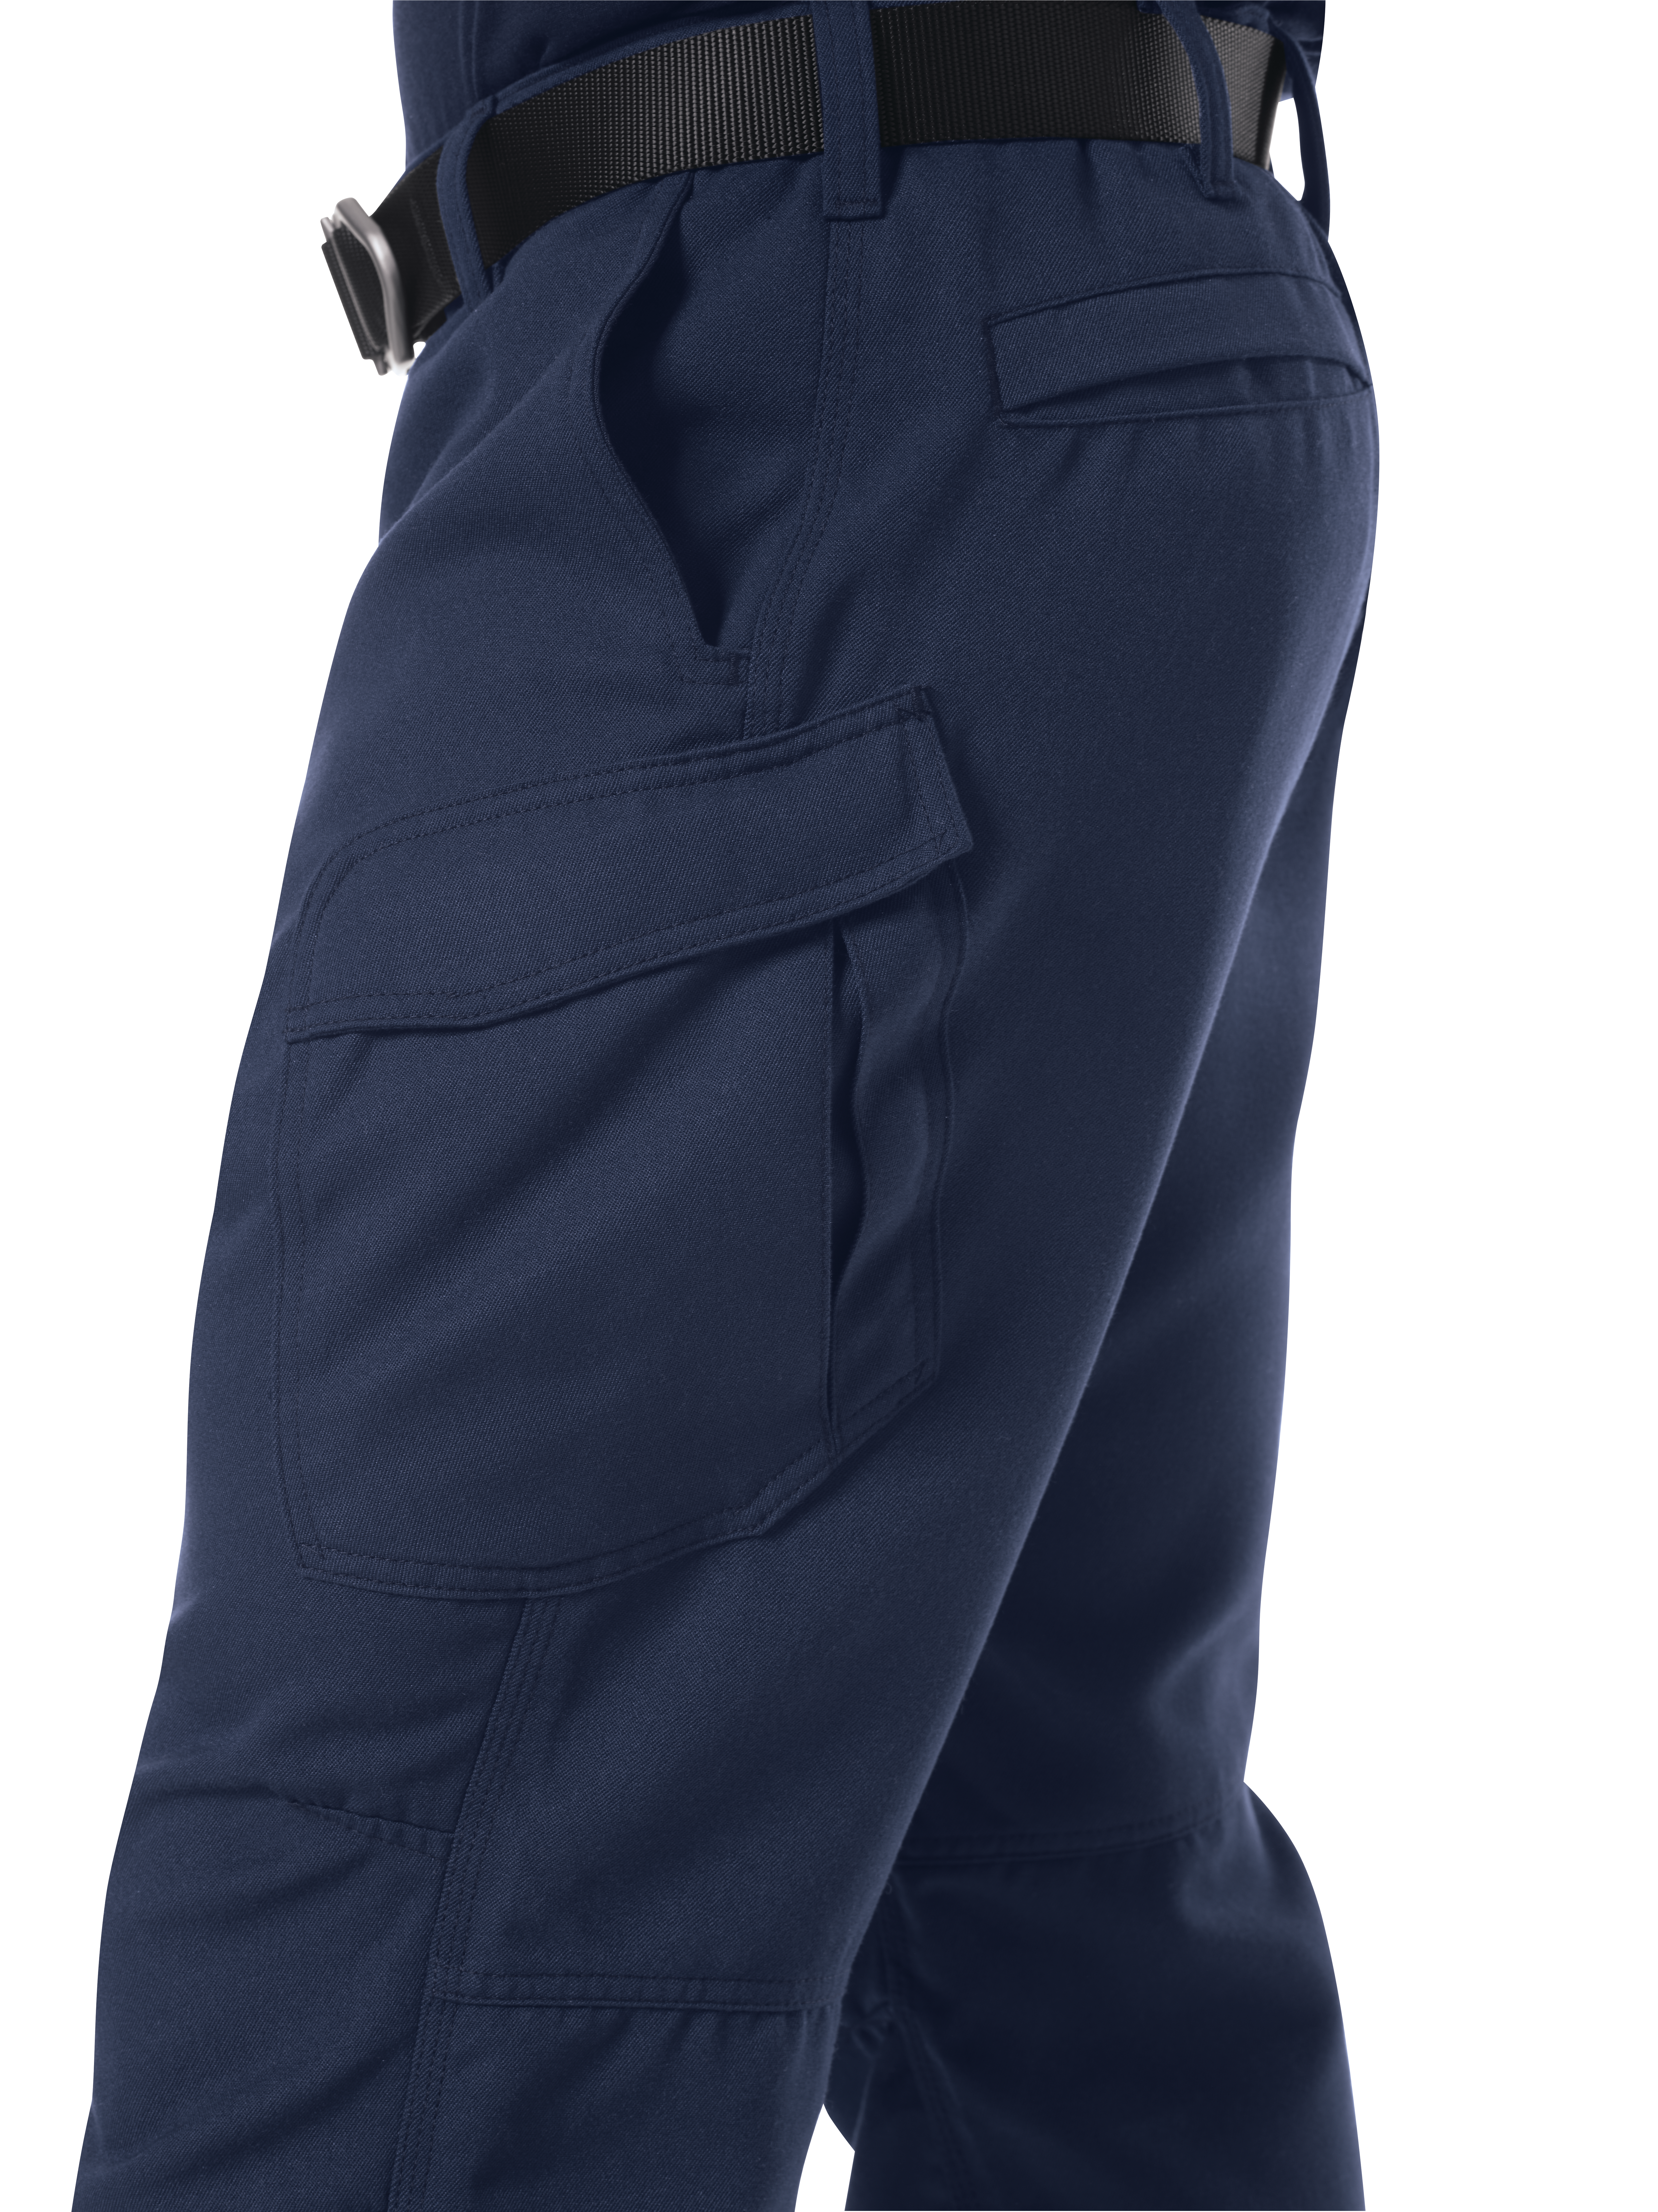 UF Pro P40 Classic Tactical Pants Navy Blue  Felddepot